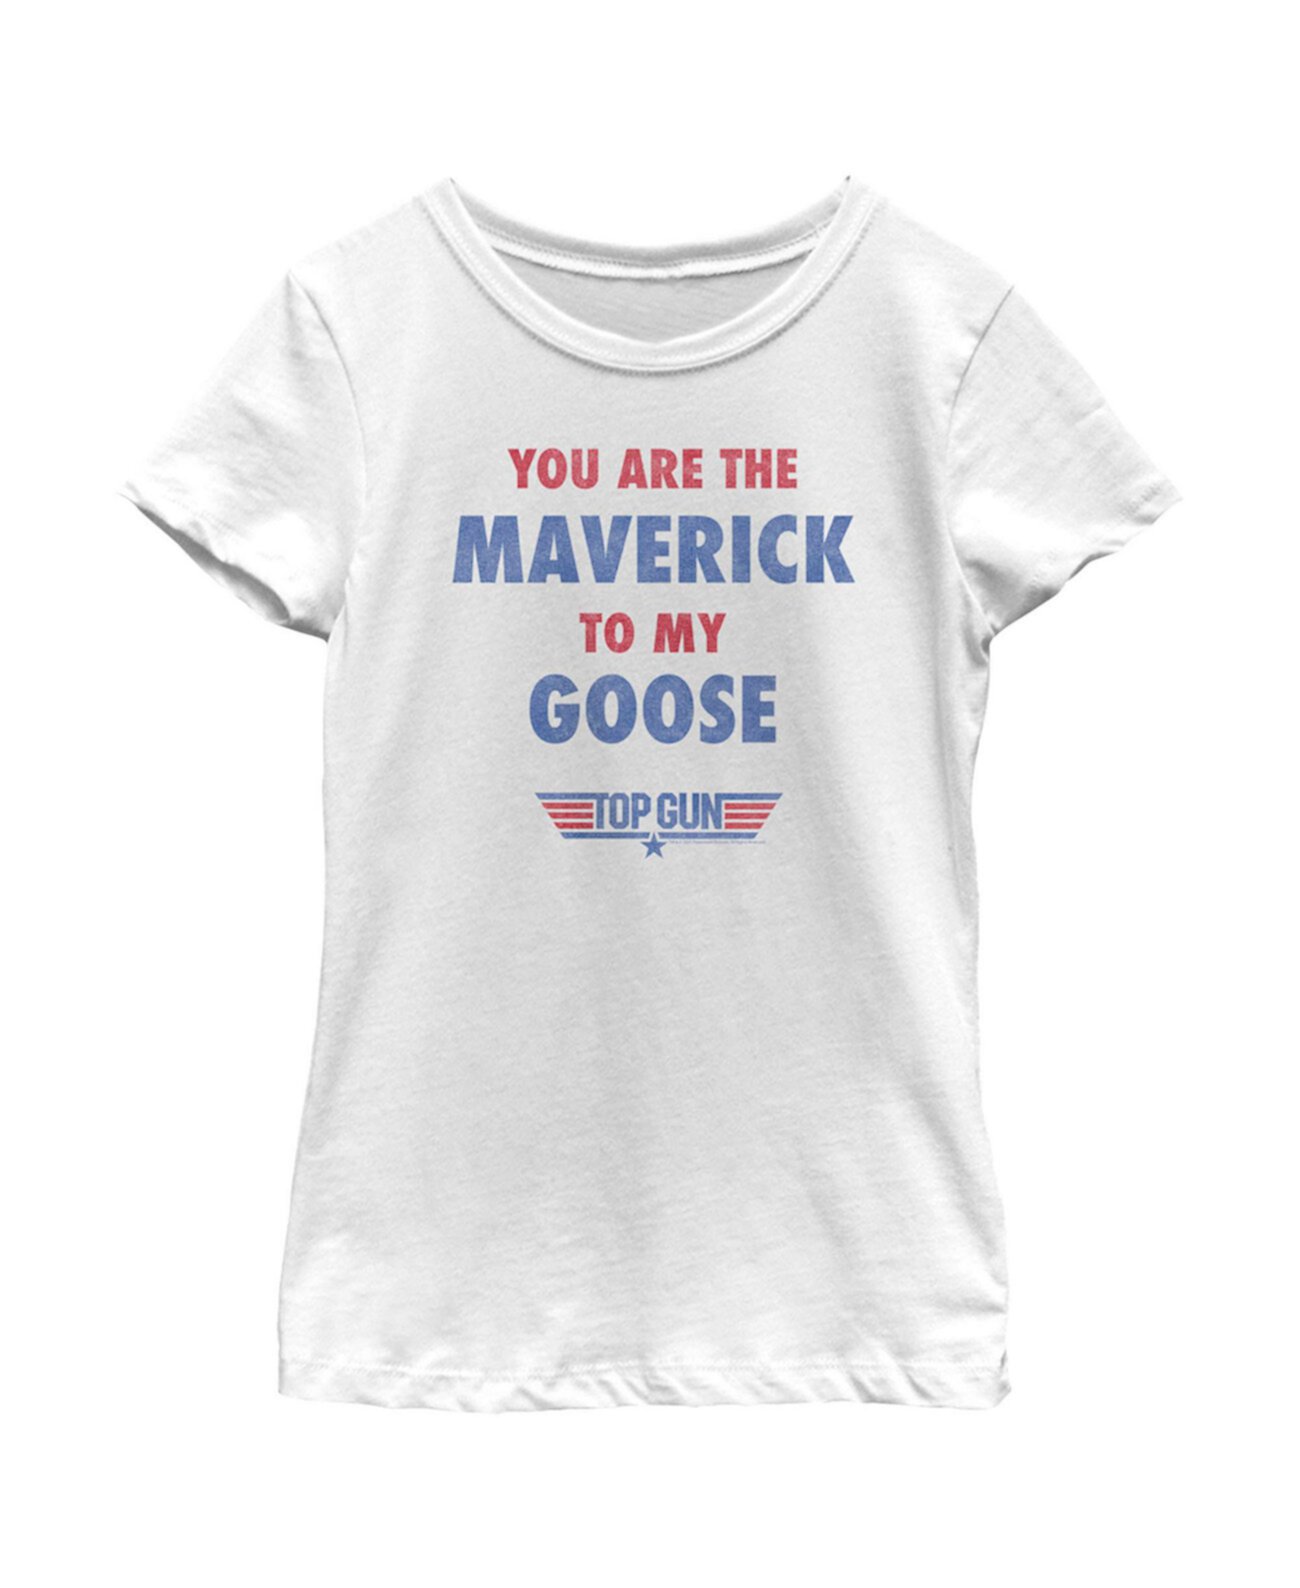 Футболка Girl's Top Gun You Are The Maverick to My Goose Child Paramount